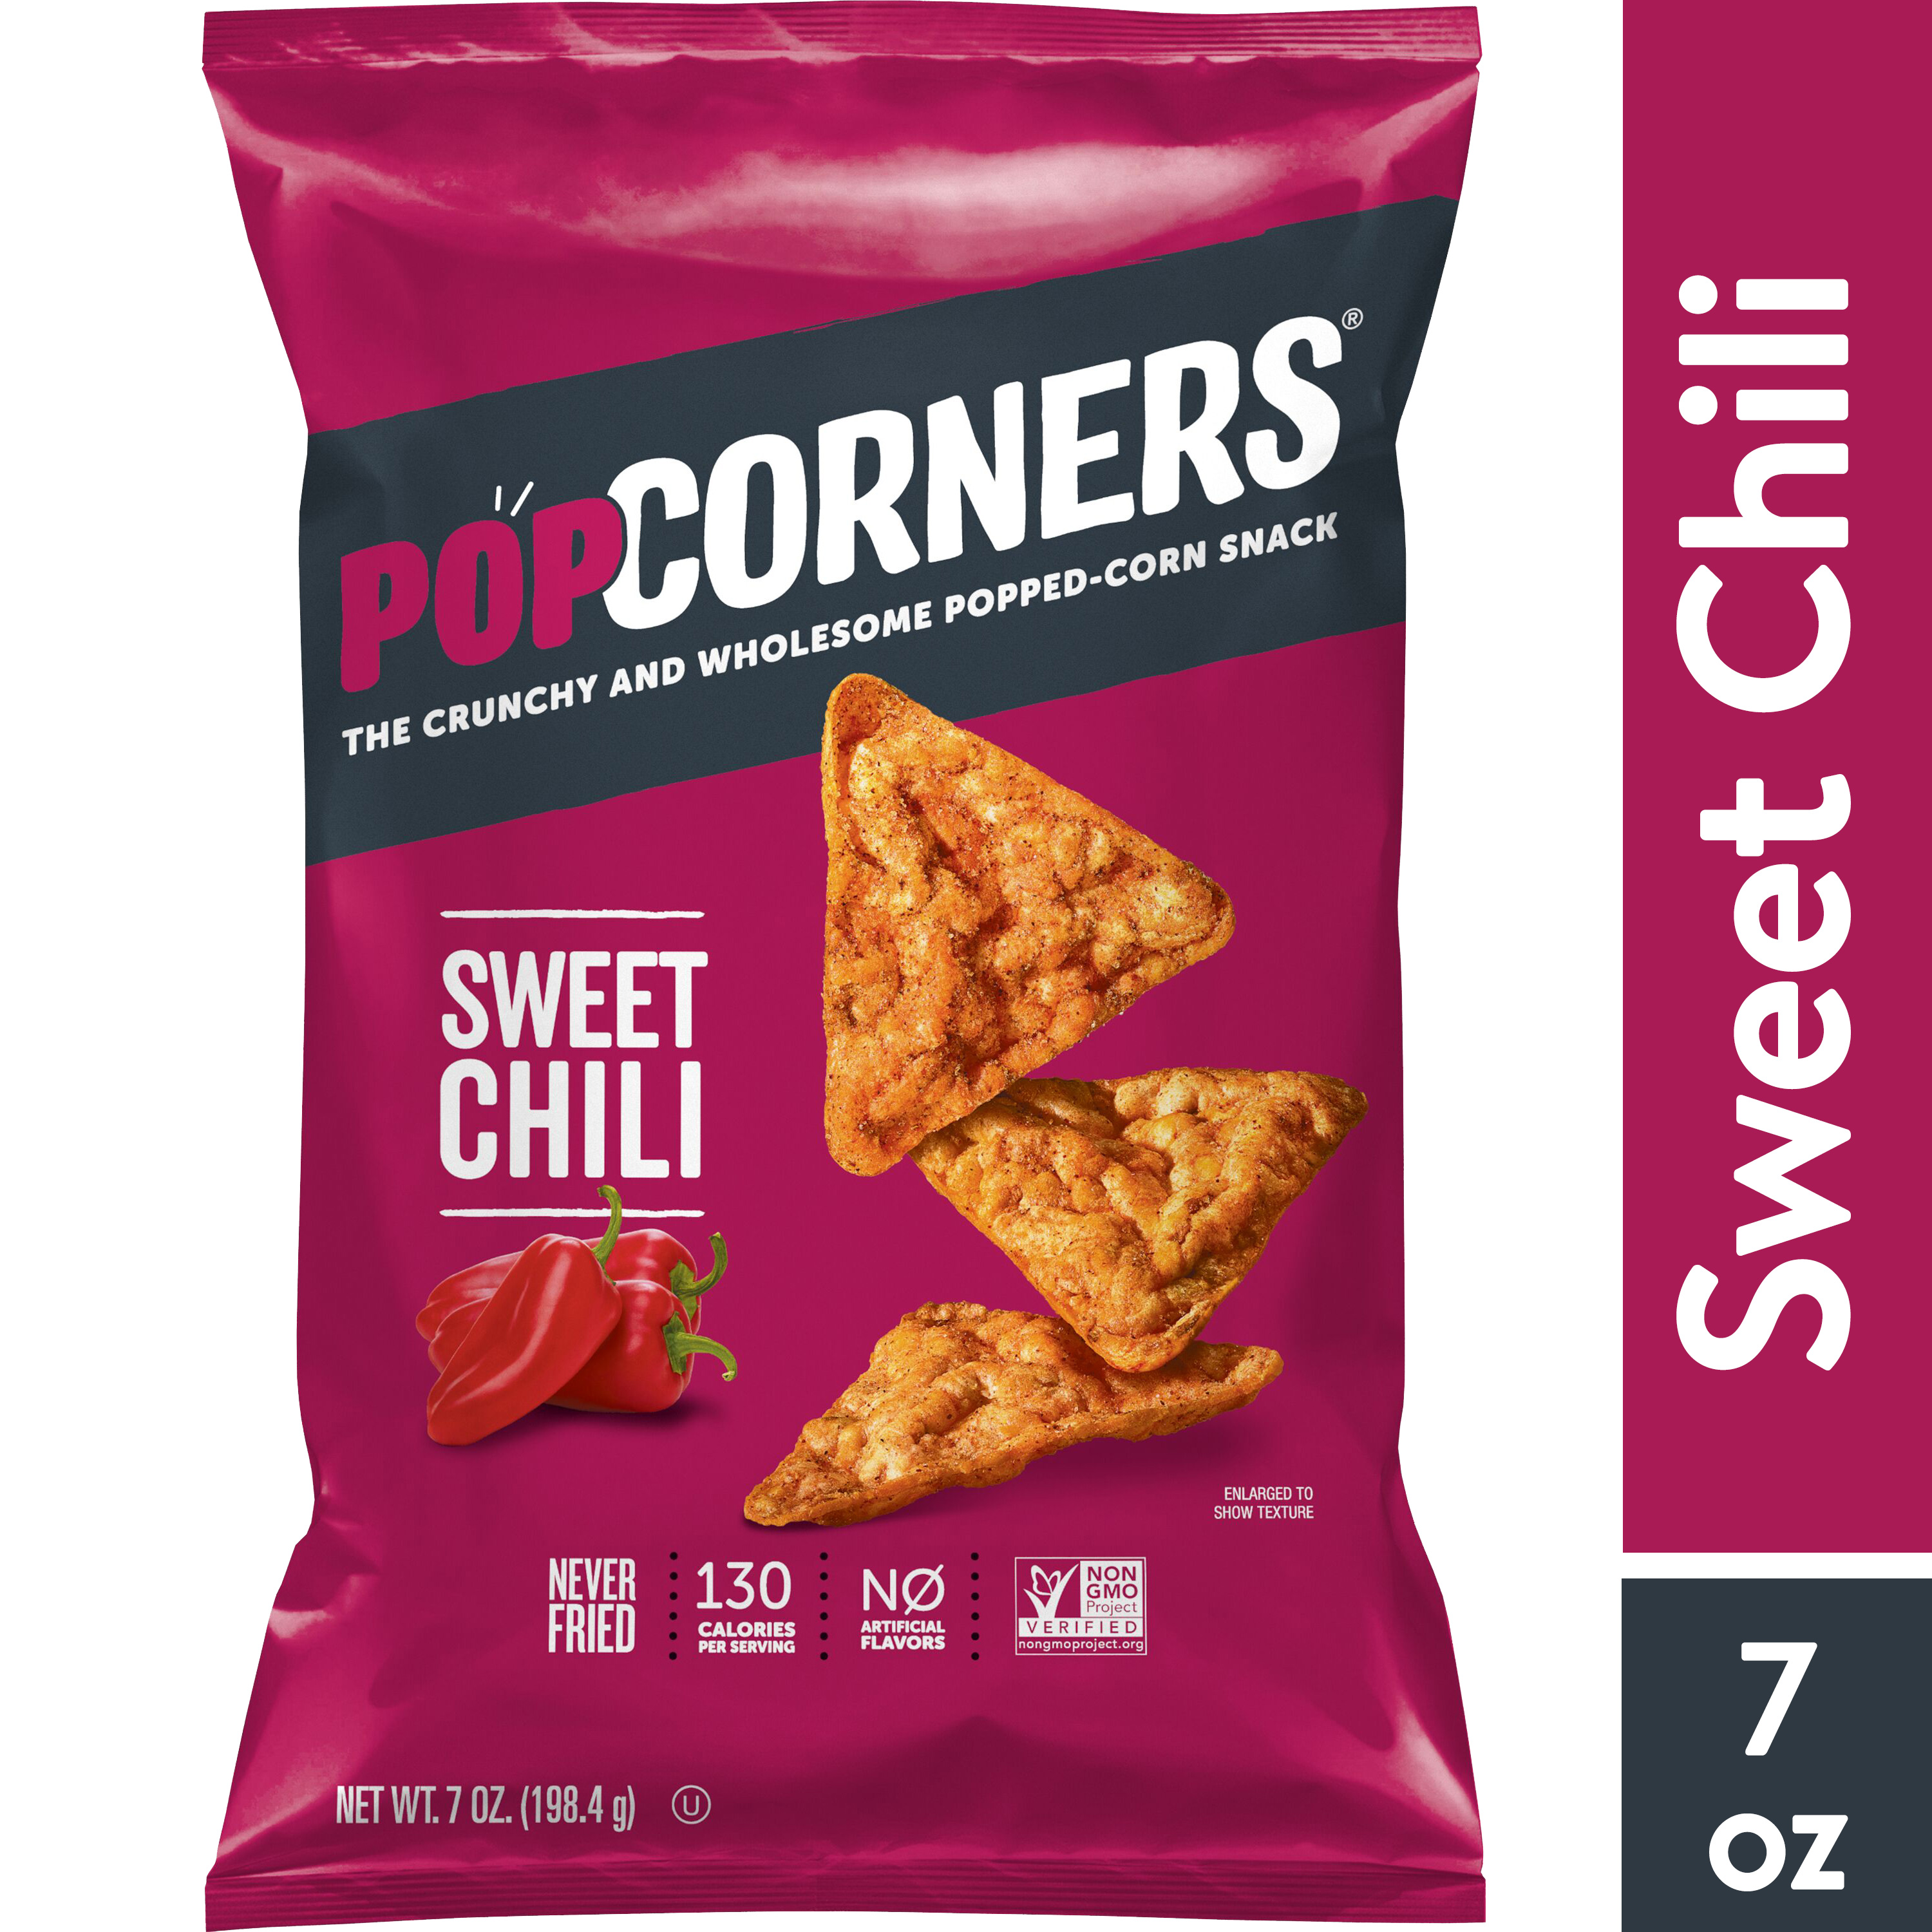 Popcorners Sweet Chili Gluten Free Popped Corn Snacks, 7 oz Bag ...